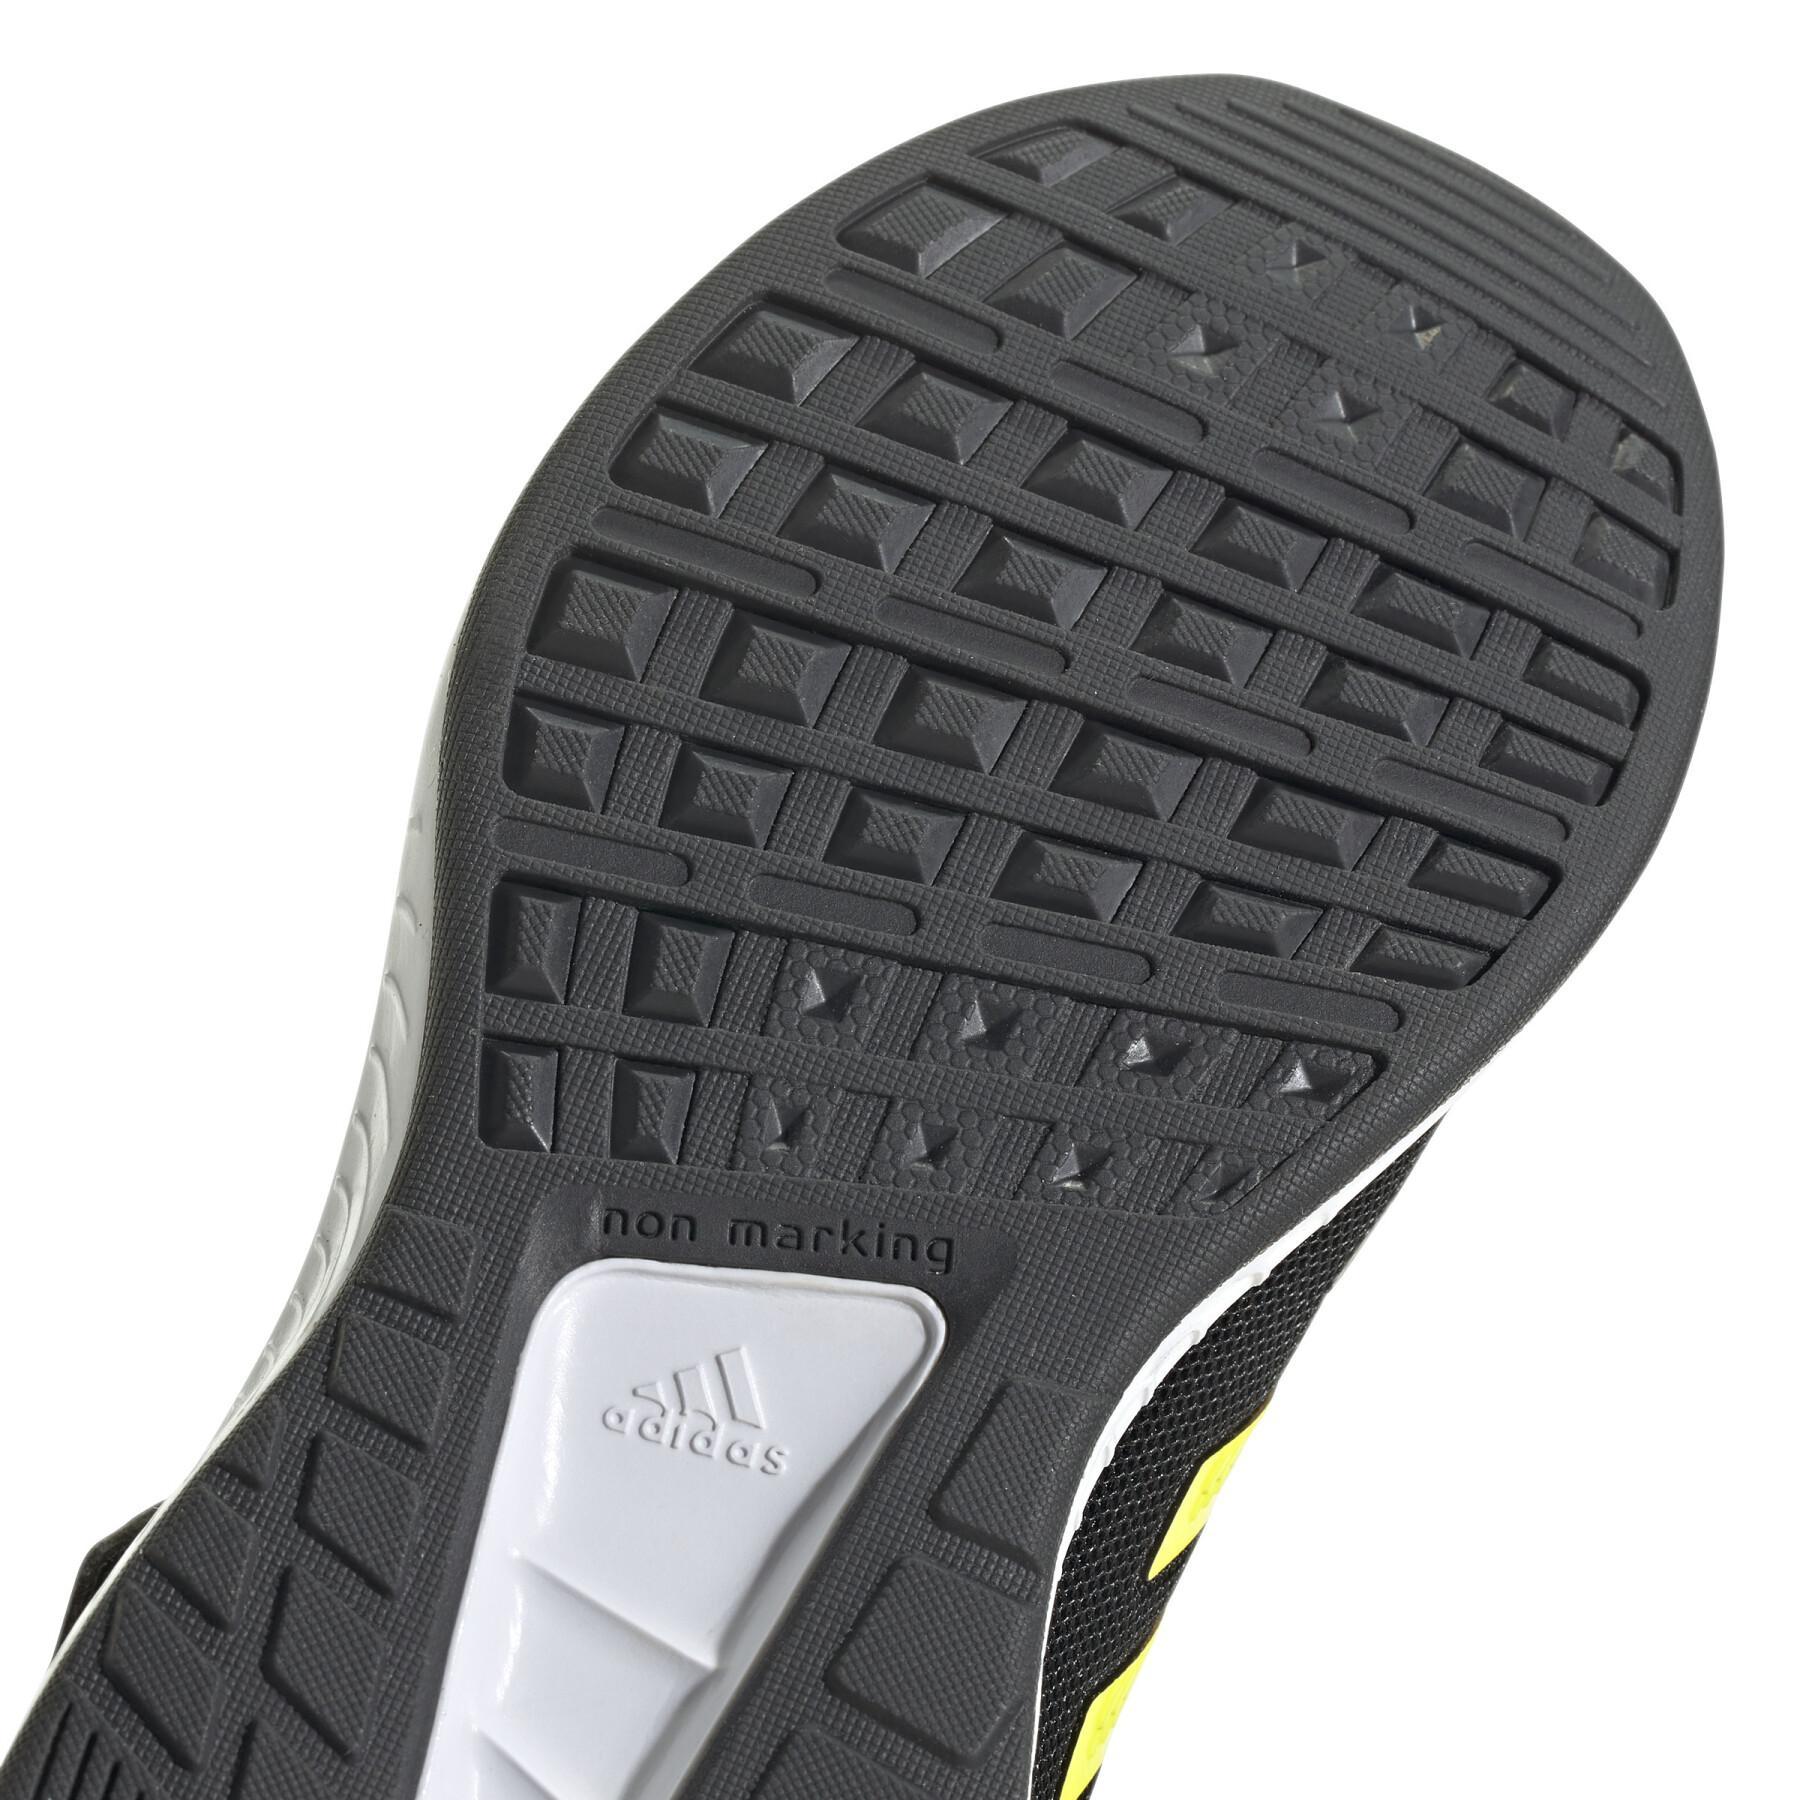 Children's running shoes adidas Runfalcon 2.0